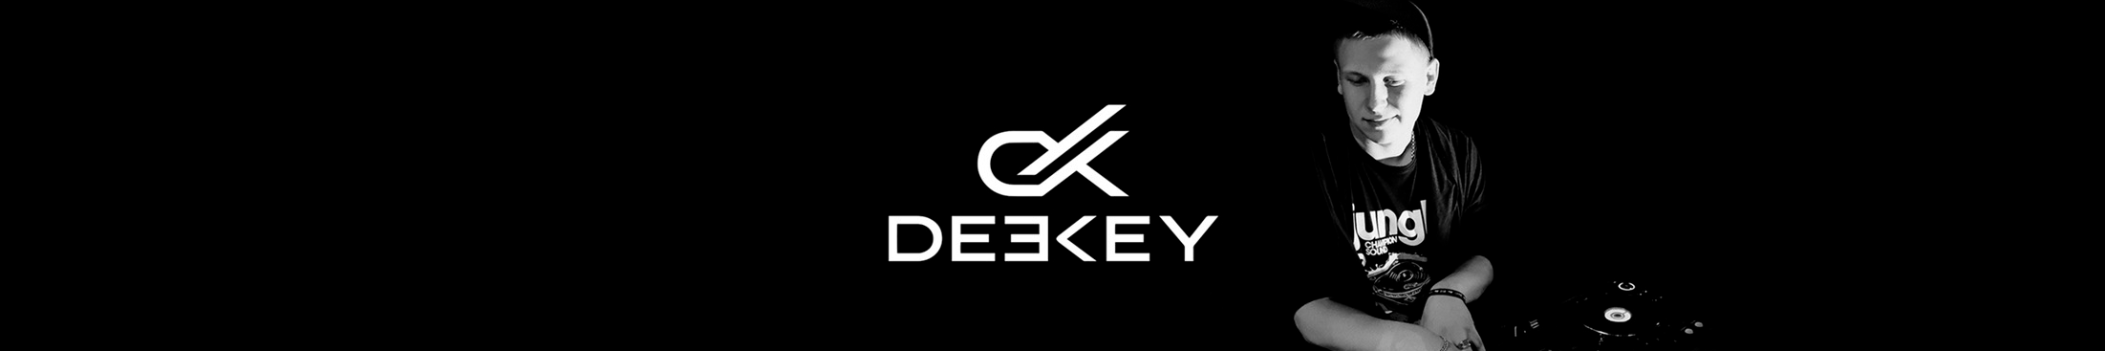 Deekey